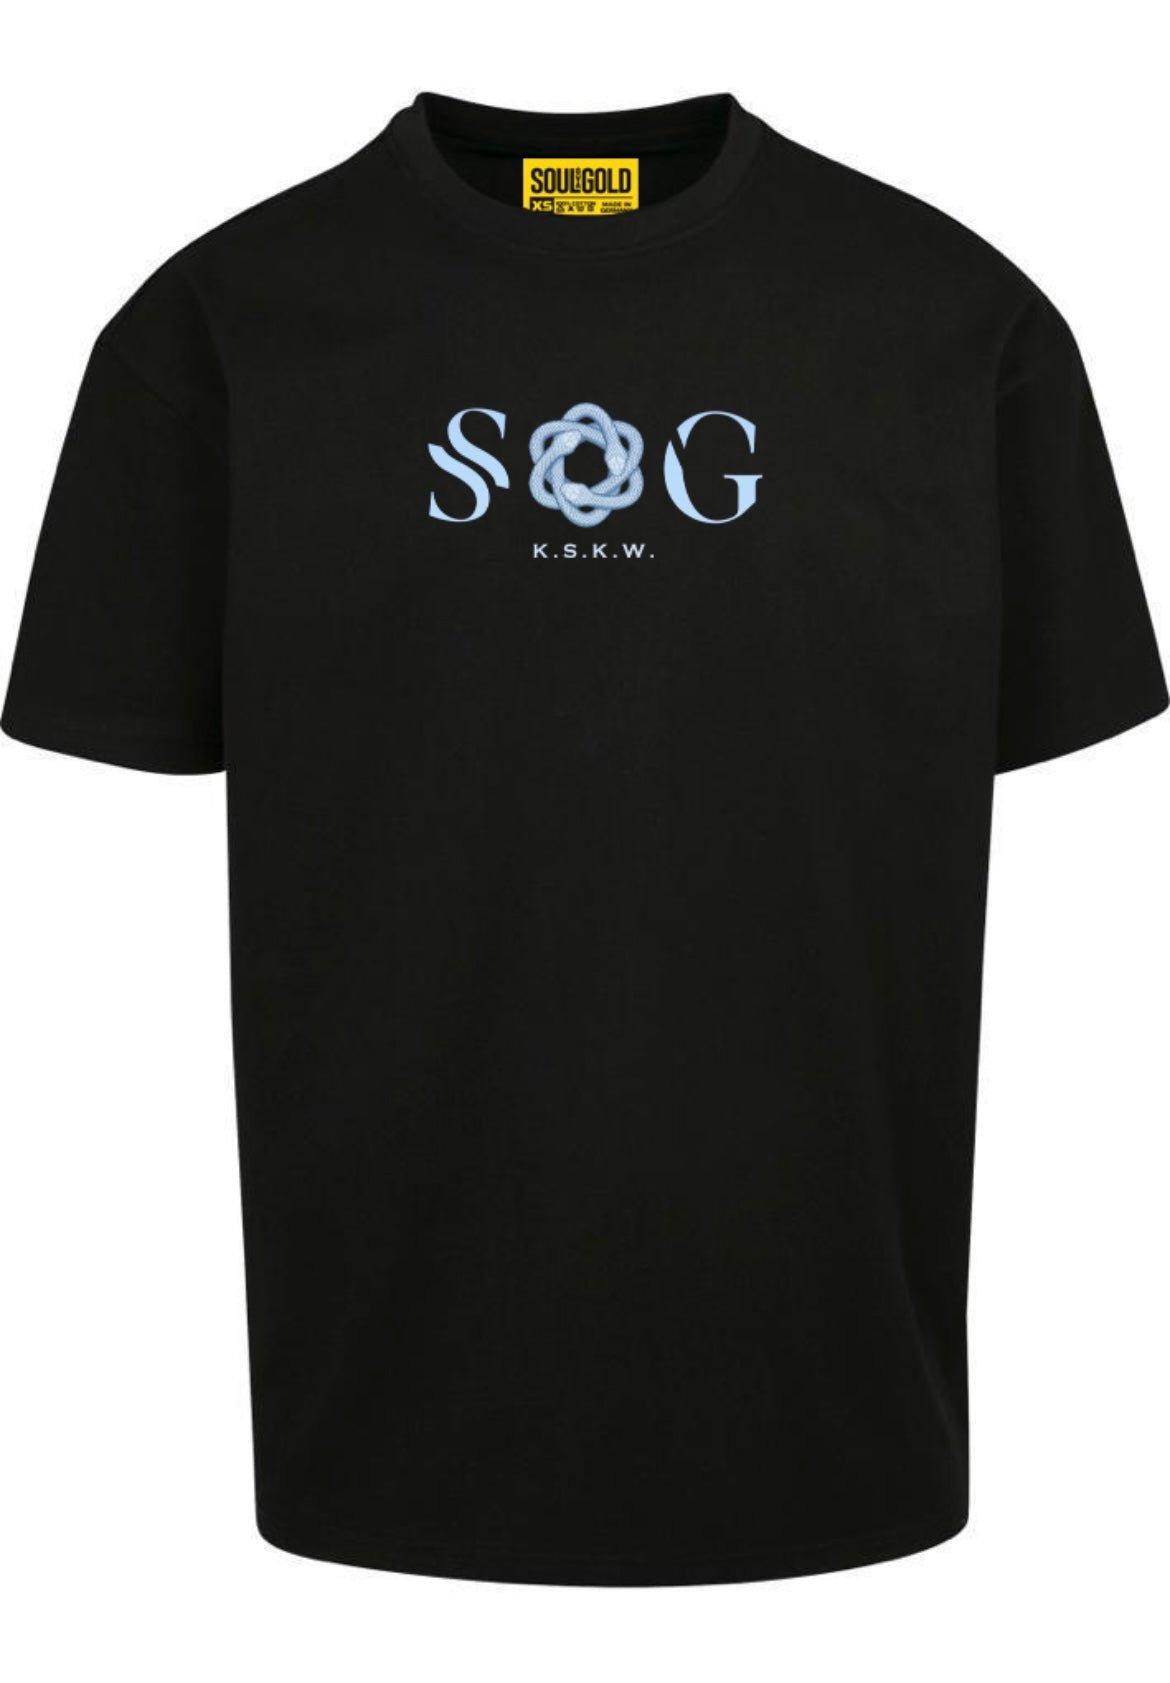 Soul Ova Gold Clothing Heartless(Black w/Blue Sapphire Print) Classic Cut T-shirt